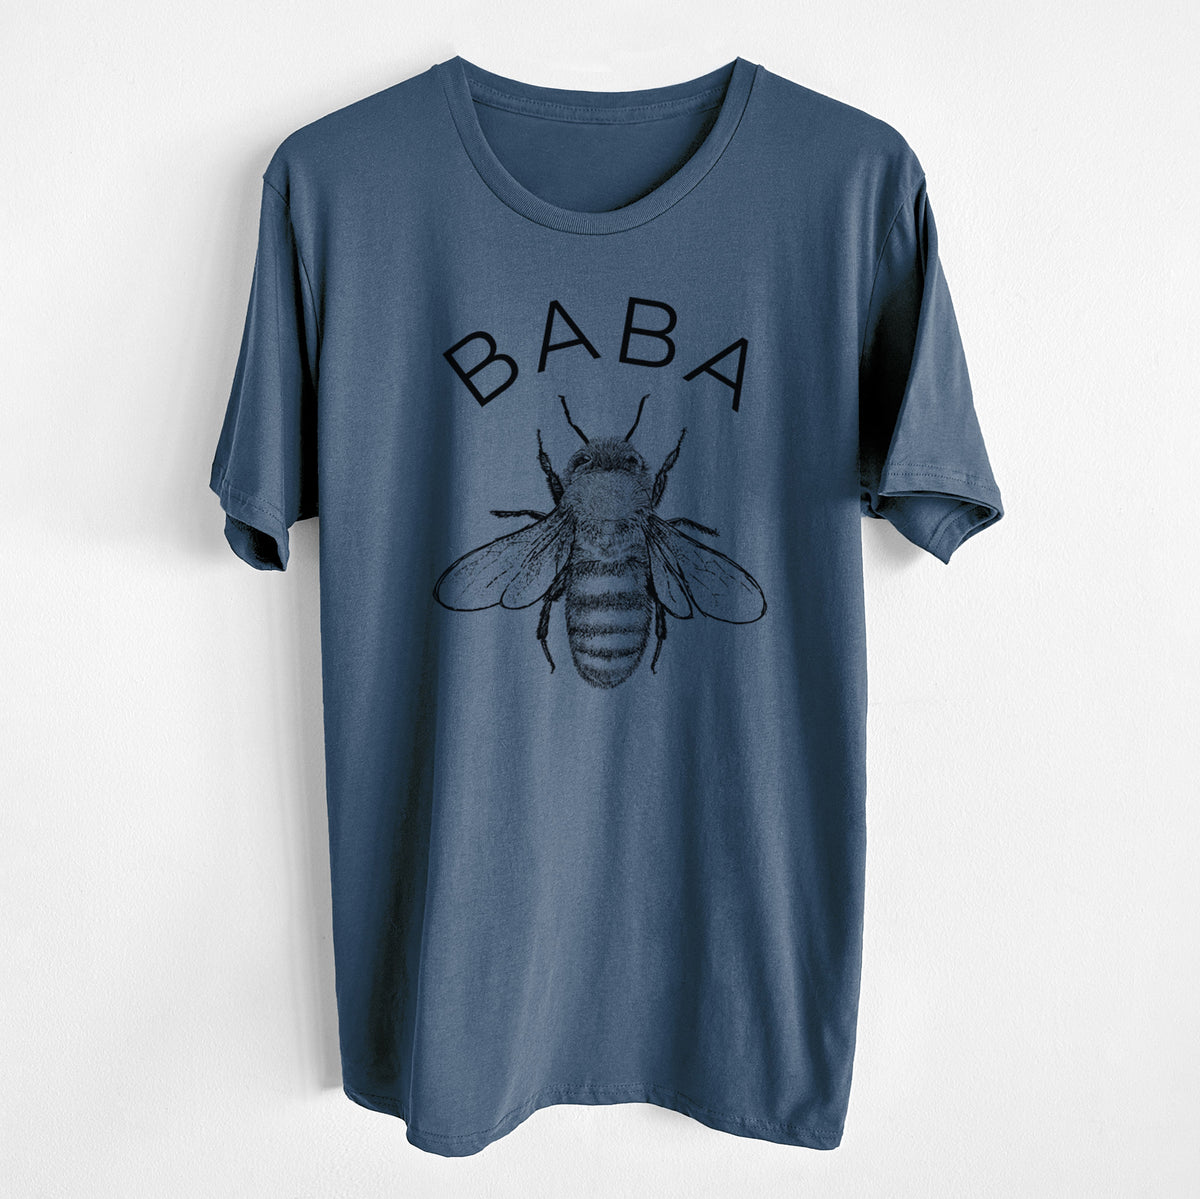 Baba Bee - Unisex Crewneck - Made in USA - 100% Organic Cotton